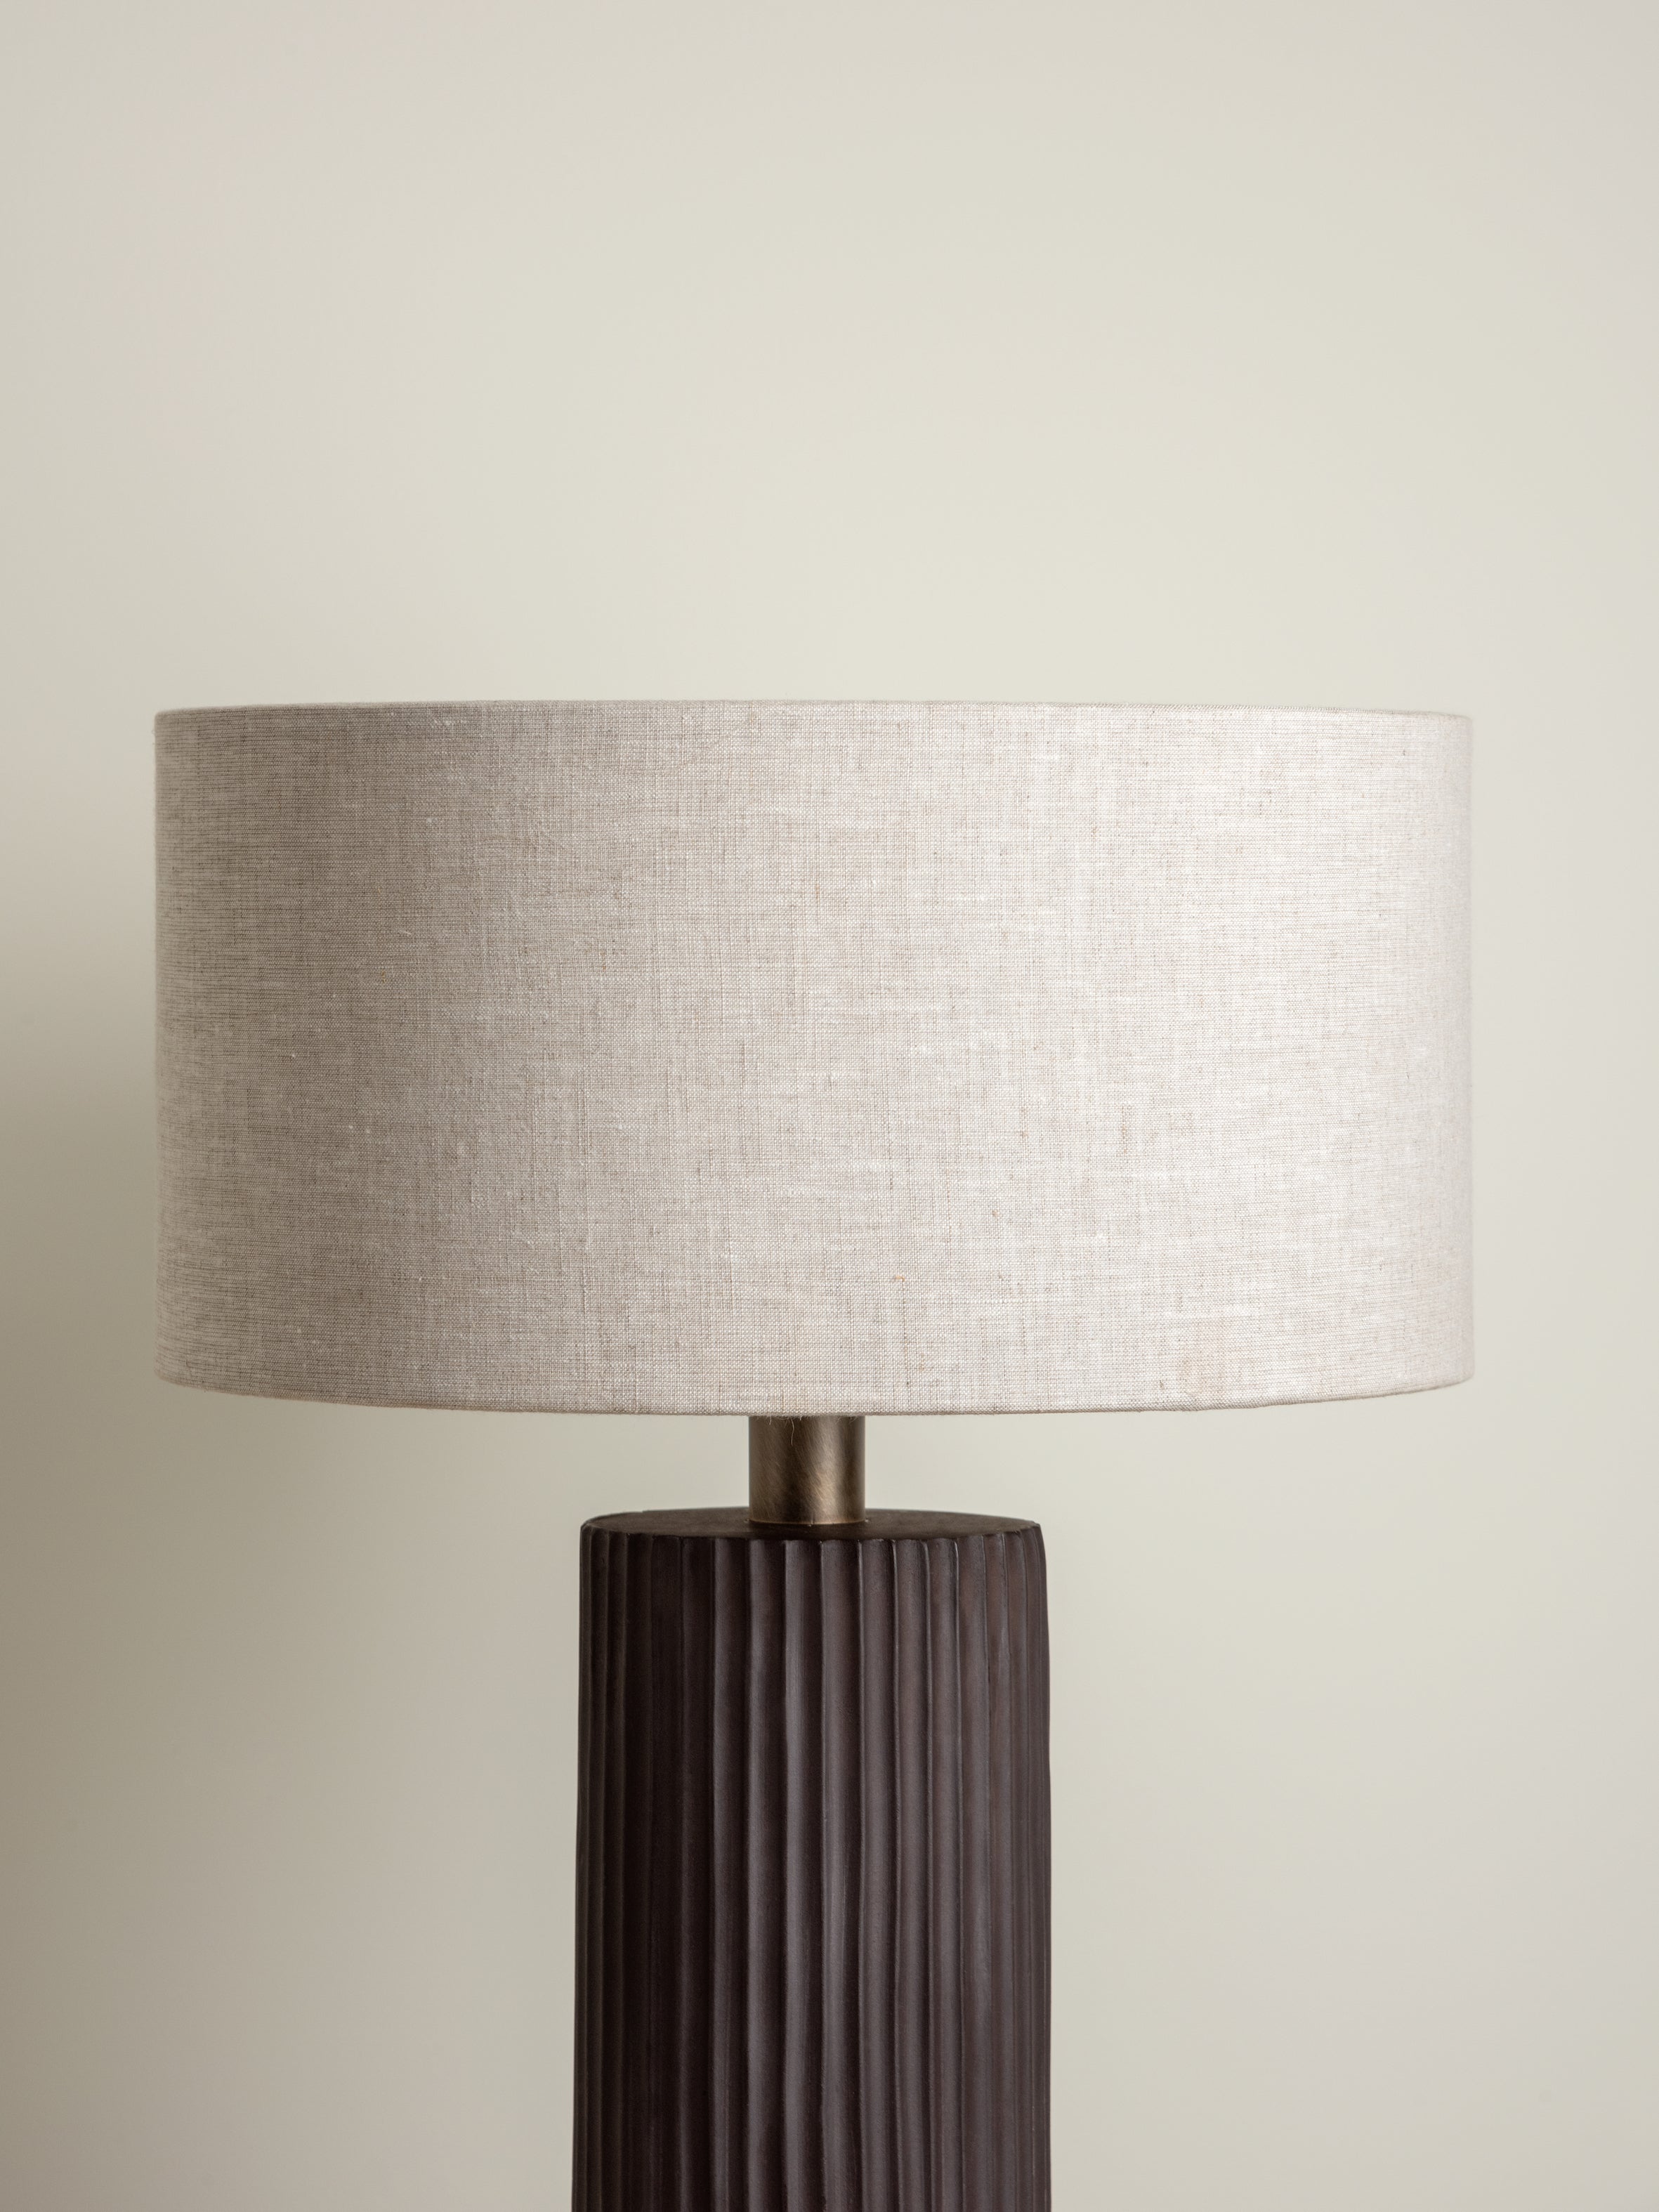 Nitara - chocolate ribbed concrete table lamp | Table Lamp | Lights & Lamps | UK | Modern Affordable Designer Lighting